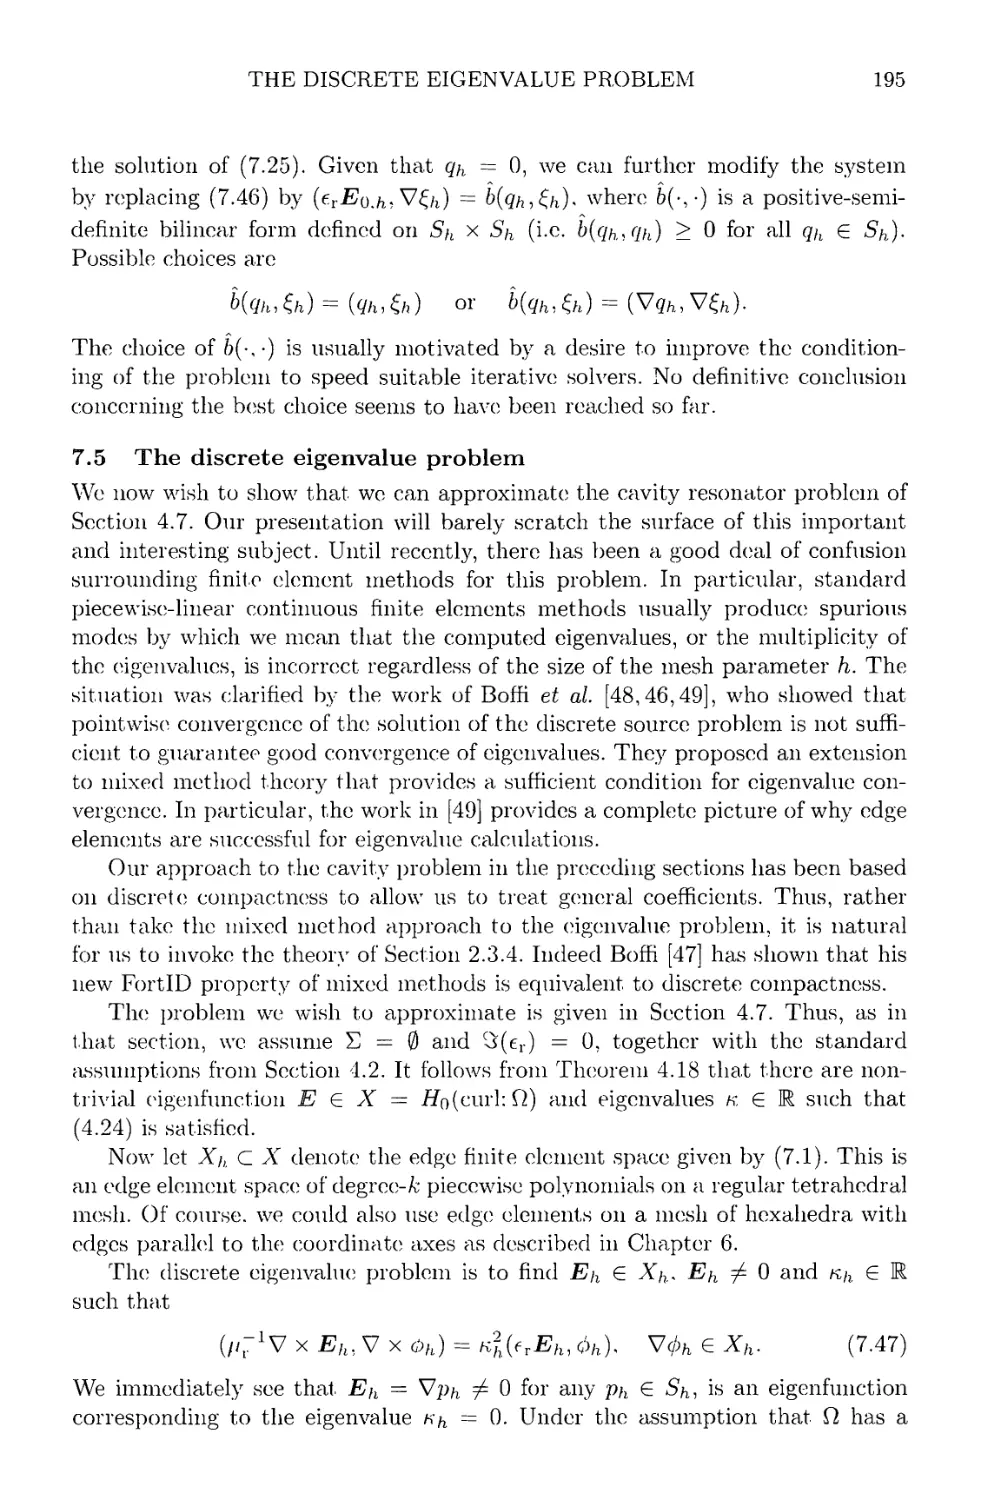 7.5 The discrete eigenvalue problem